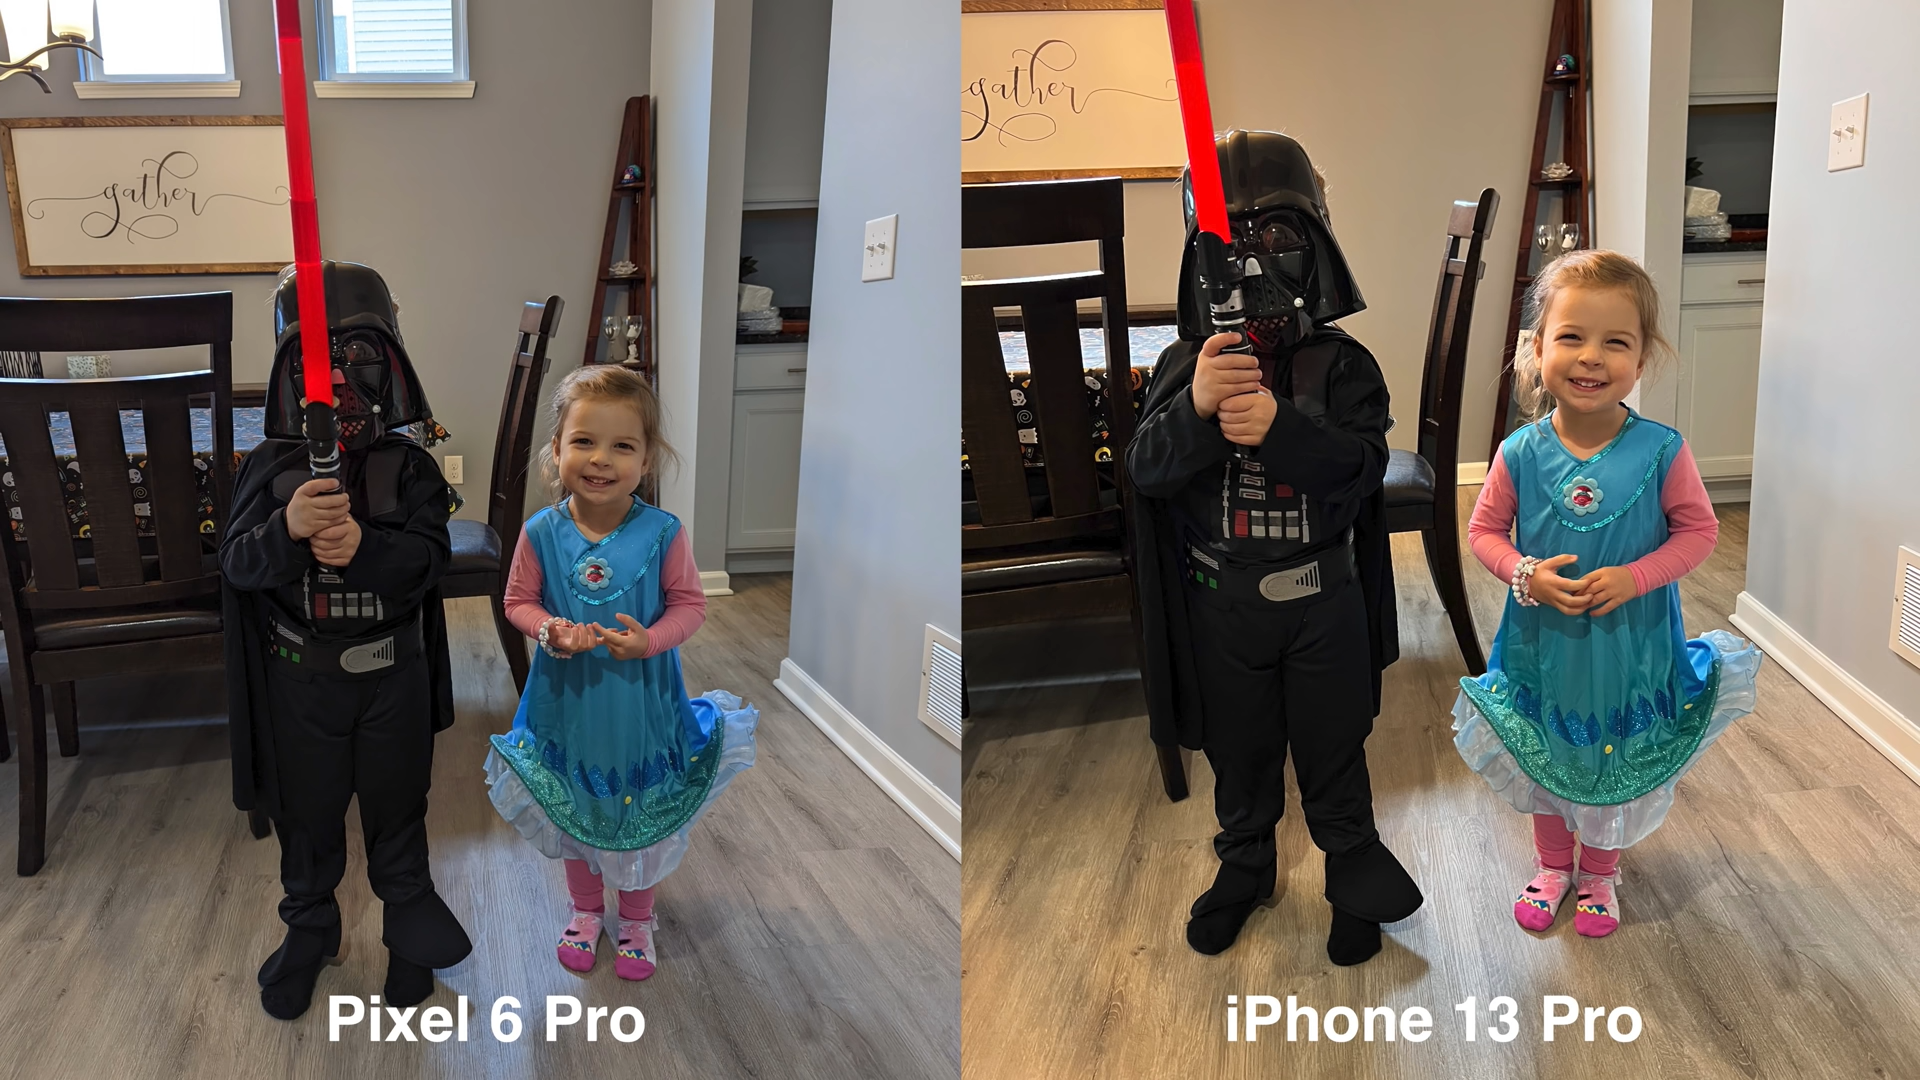 Comparación Pixel 6 Pro vs iPhone 13 Pro